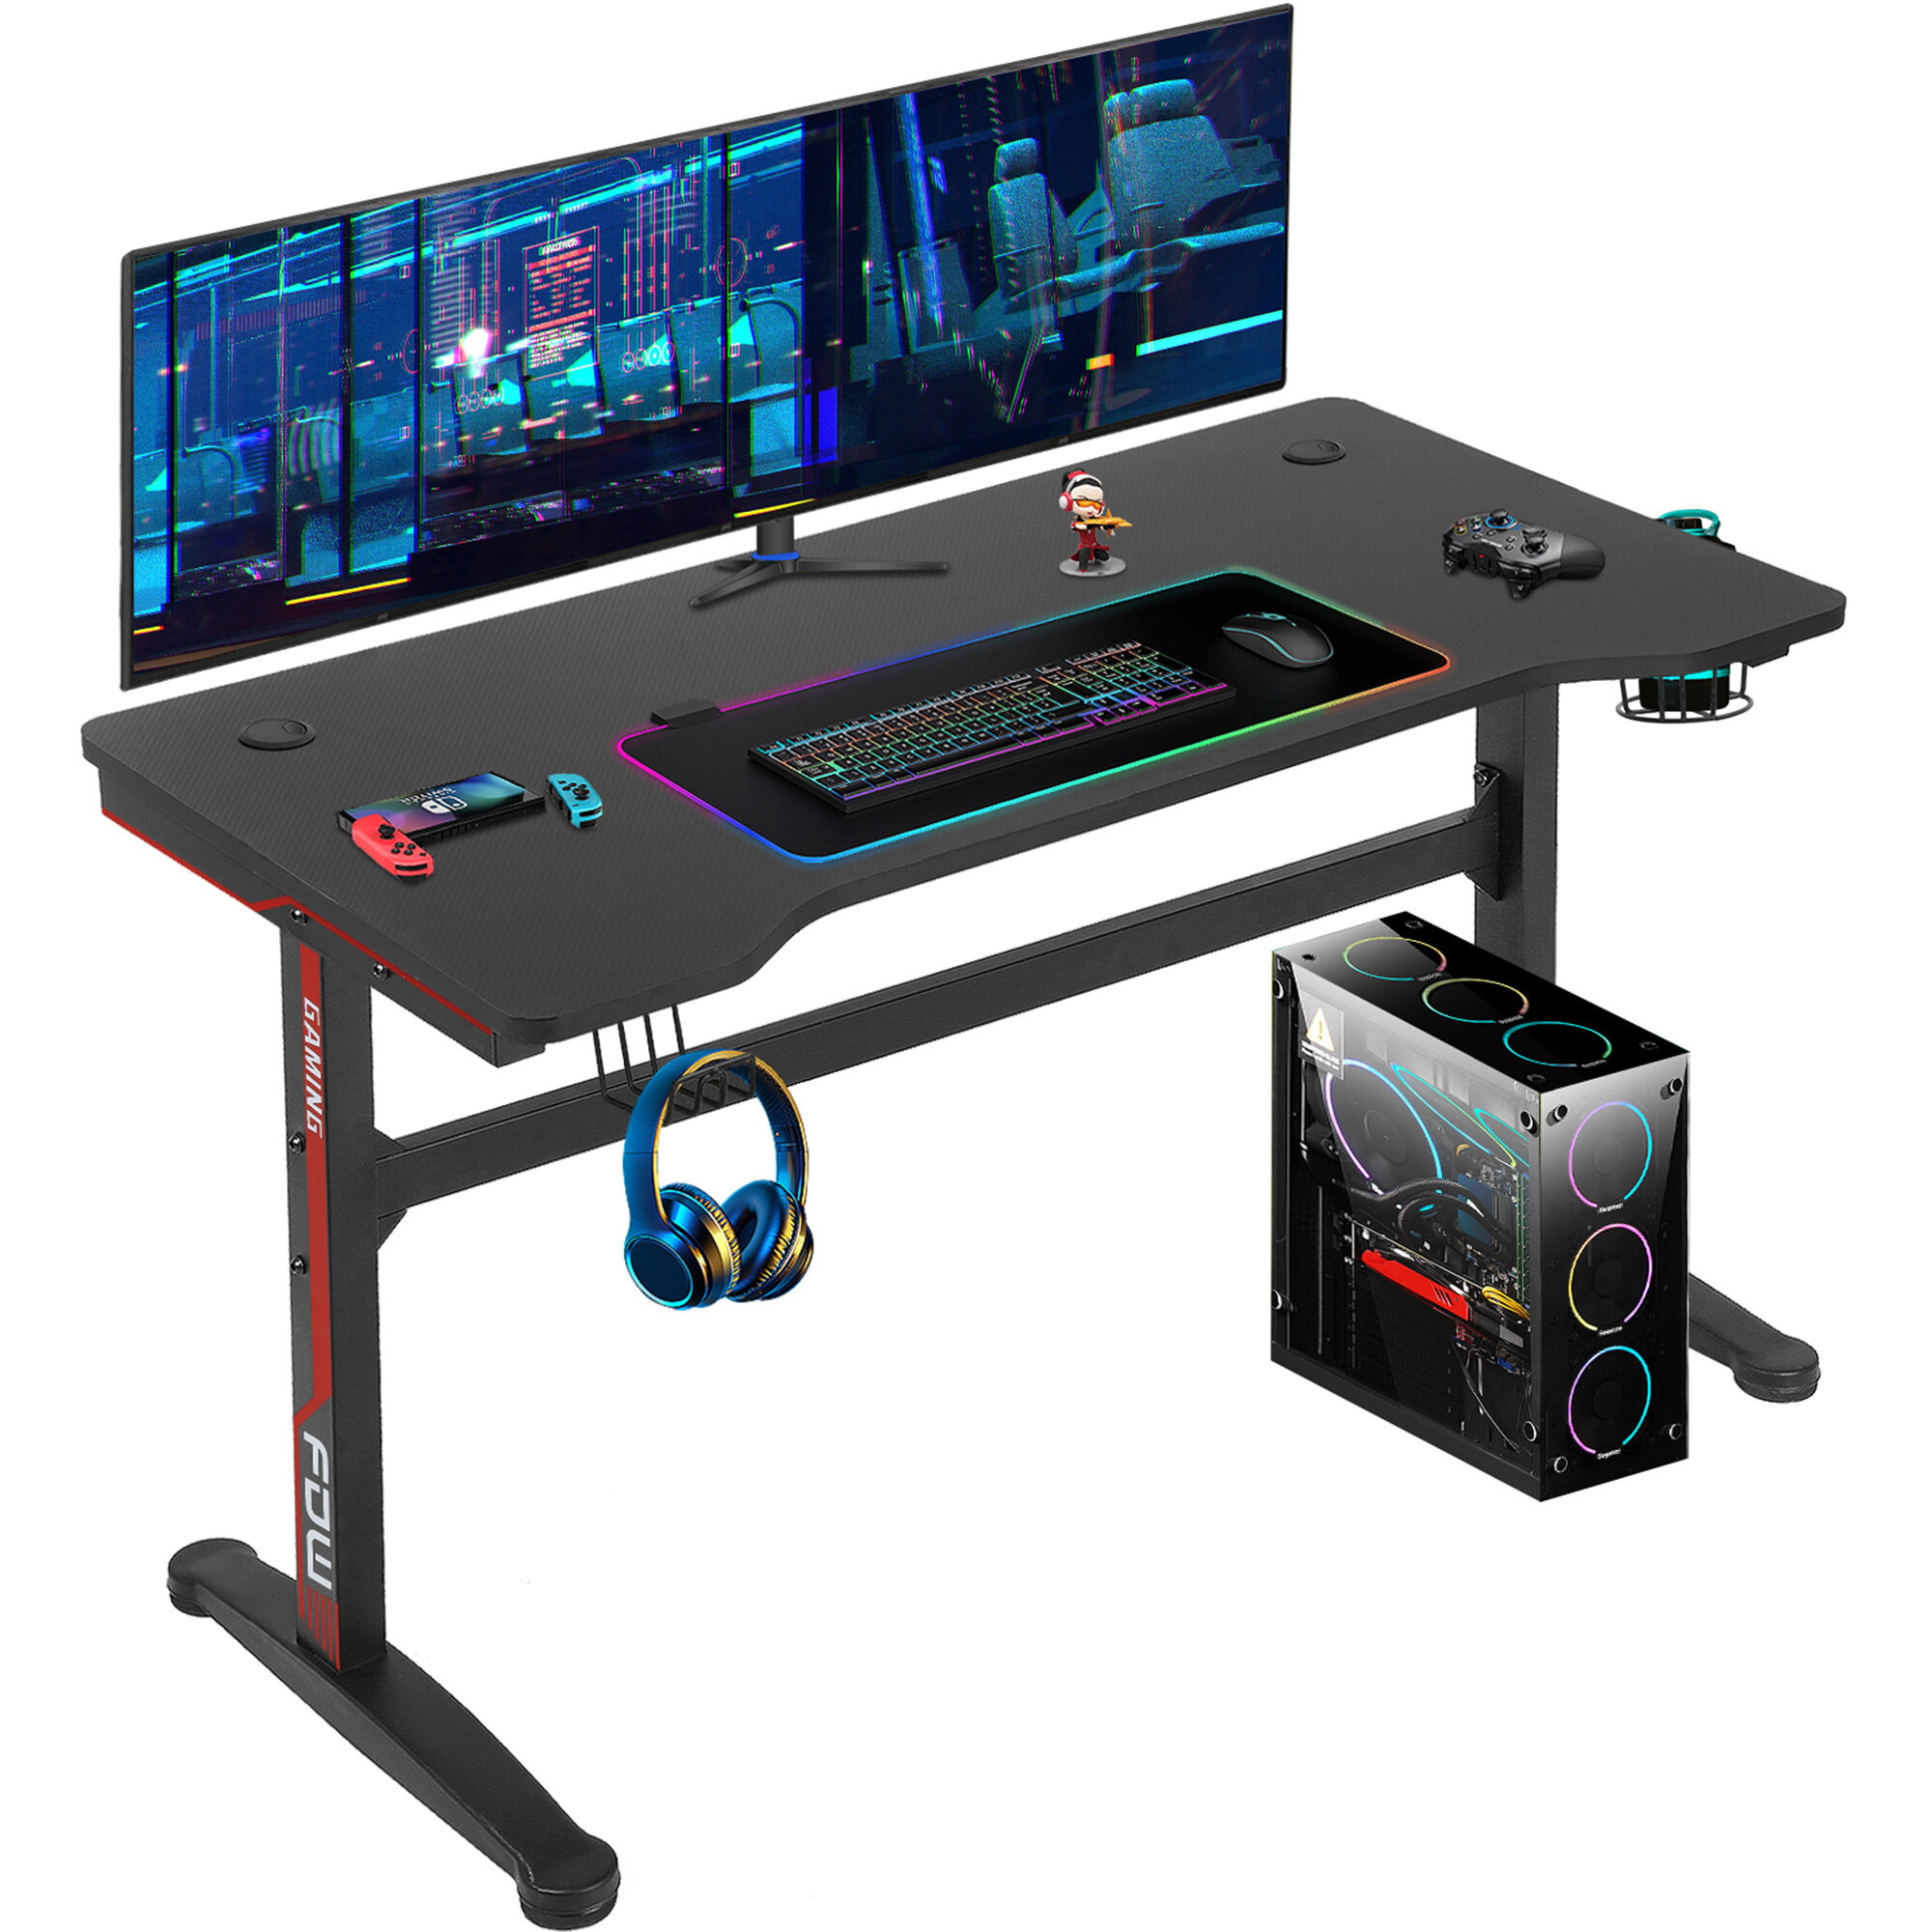 Ergonomic PC Gaming Desk, Cable Management, Top Material